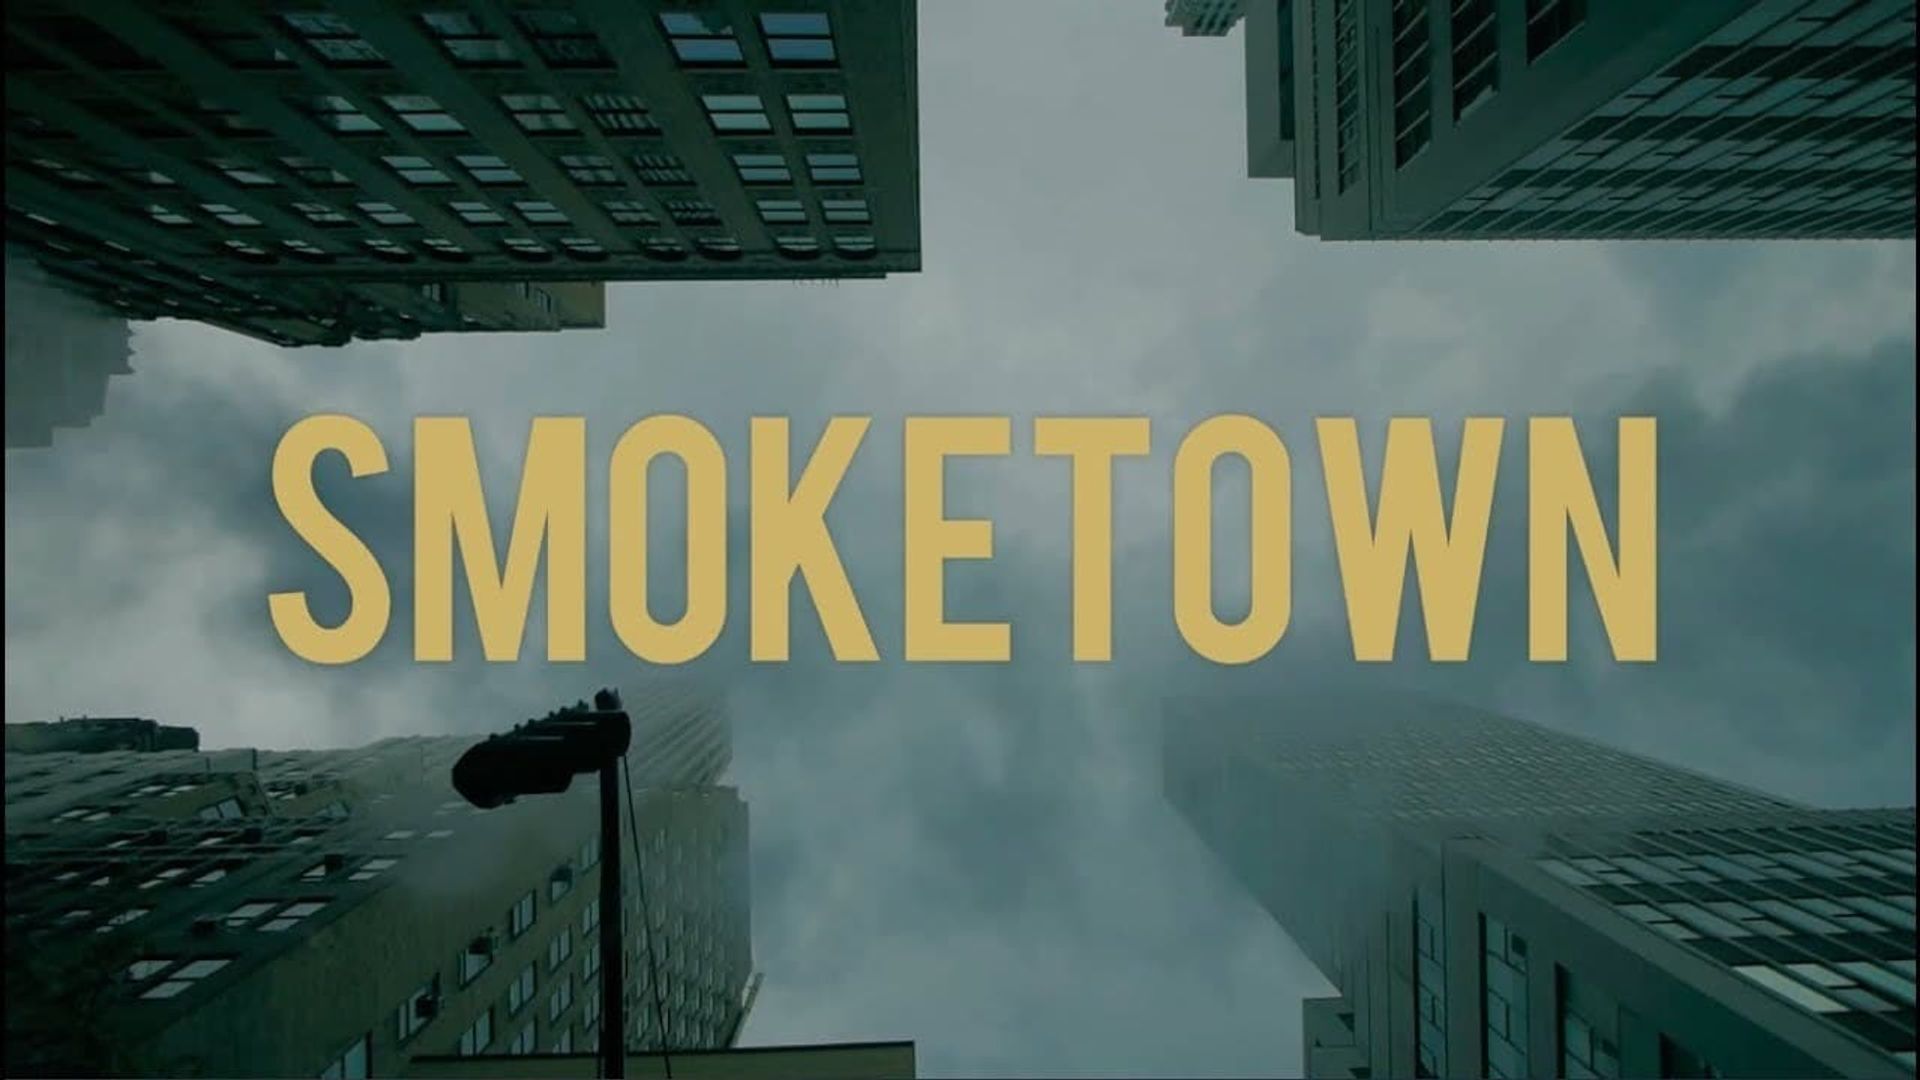 Smoketown background